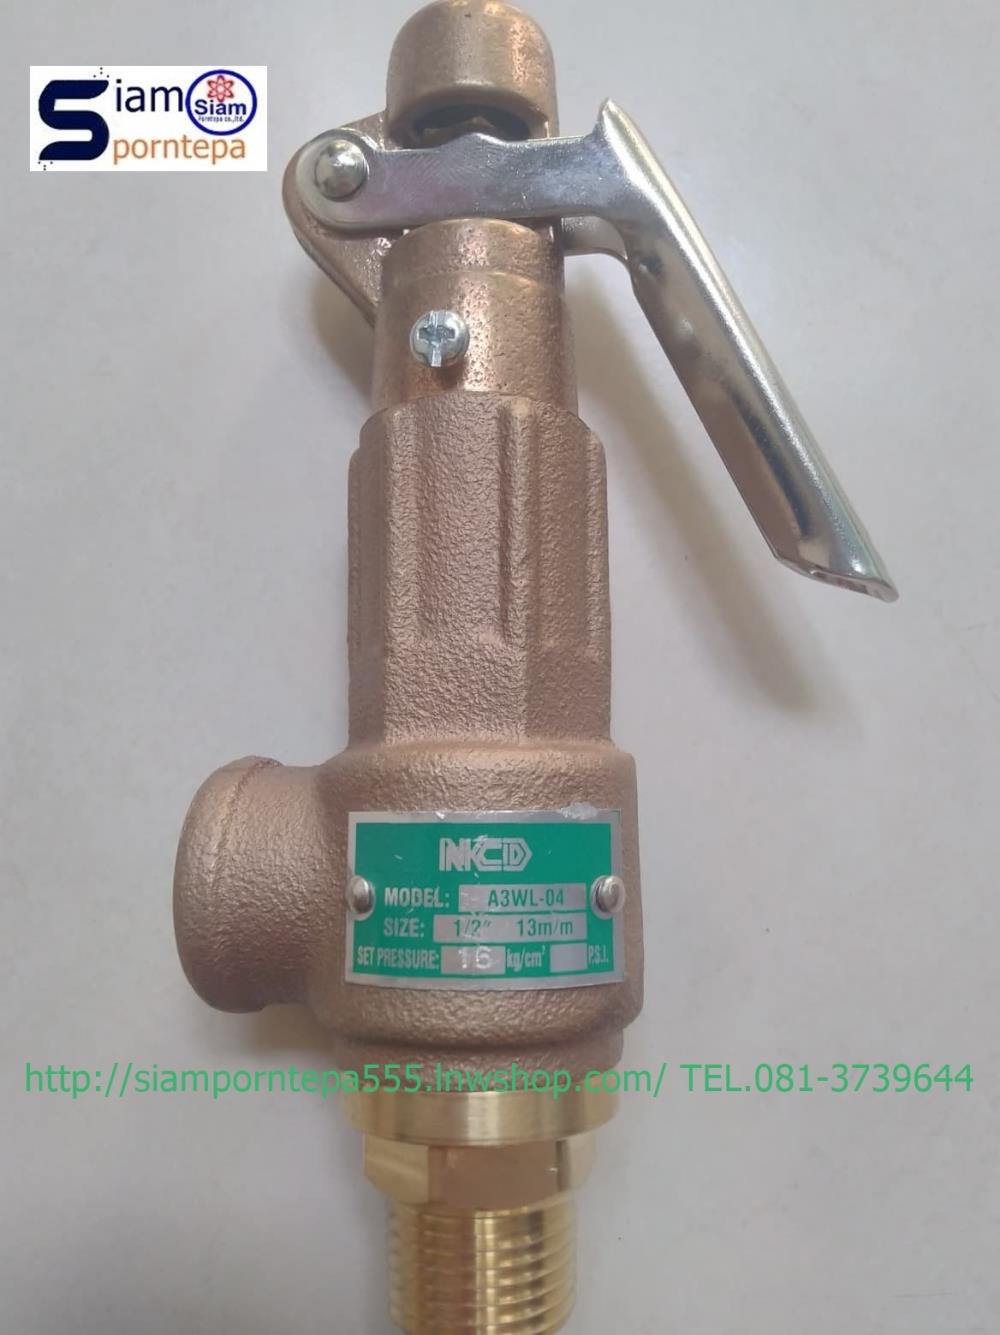 A3WL-06-3.5 Safety relief valve ขนาด 3/4"ทองเหลือง แบบมีด้าม Pressure 3.5 bar ส่งฟรีทั่วประเทศ,A3WL-06-3.5 Safety relief valve ขนาด 3/4"ทองเหลือง,A3WL-06-3.5 Safety relief valve ขนาด 3/4"ทองเหลือง korea,NCD Safety relief valve Korea,Pumps, Valves and Accessories/Valves/Safety Relief Valve